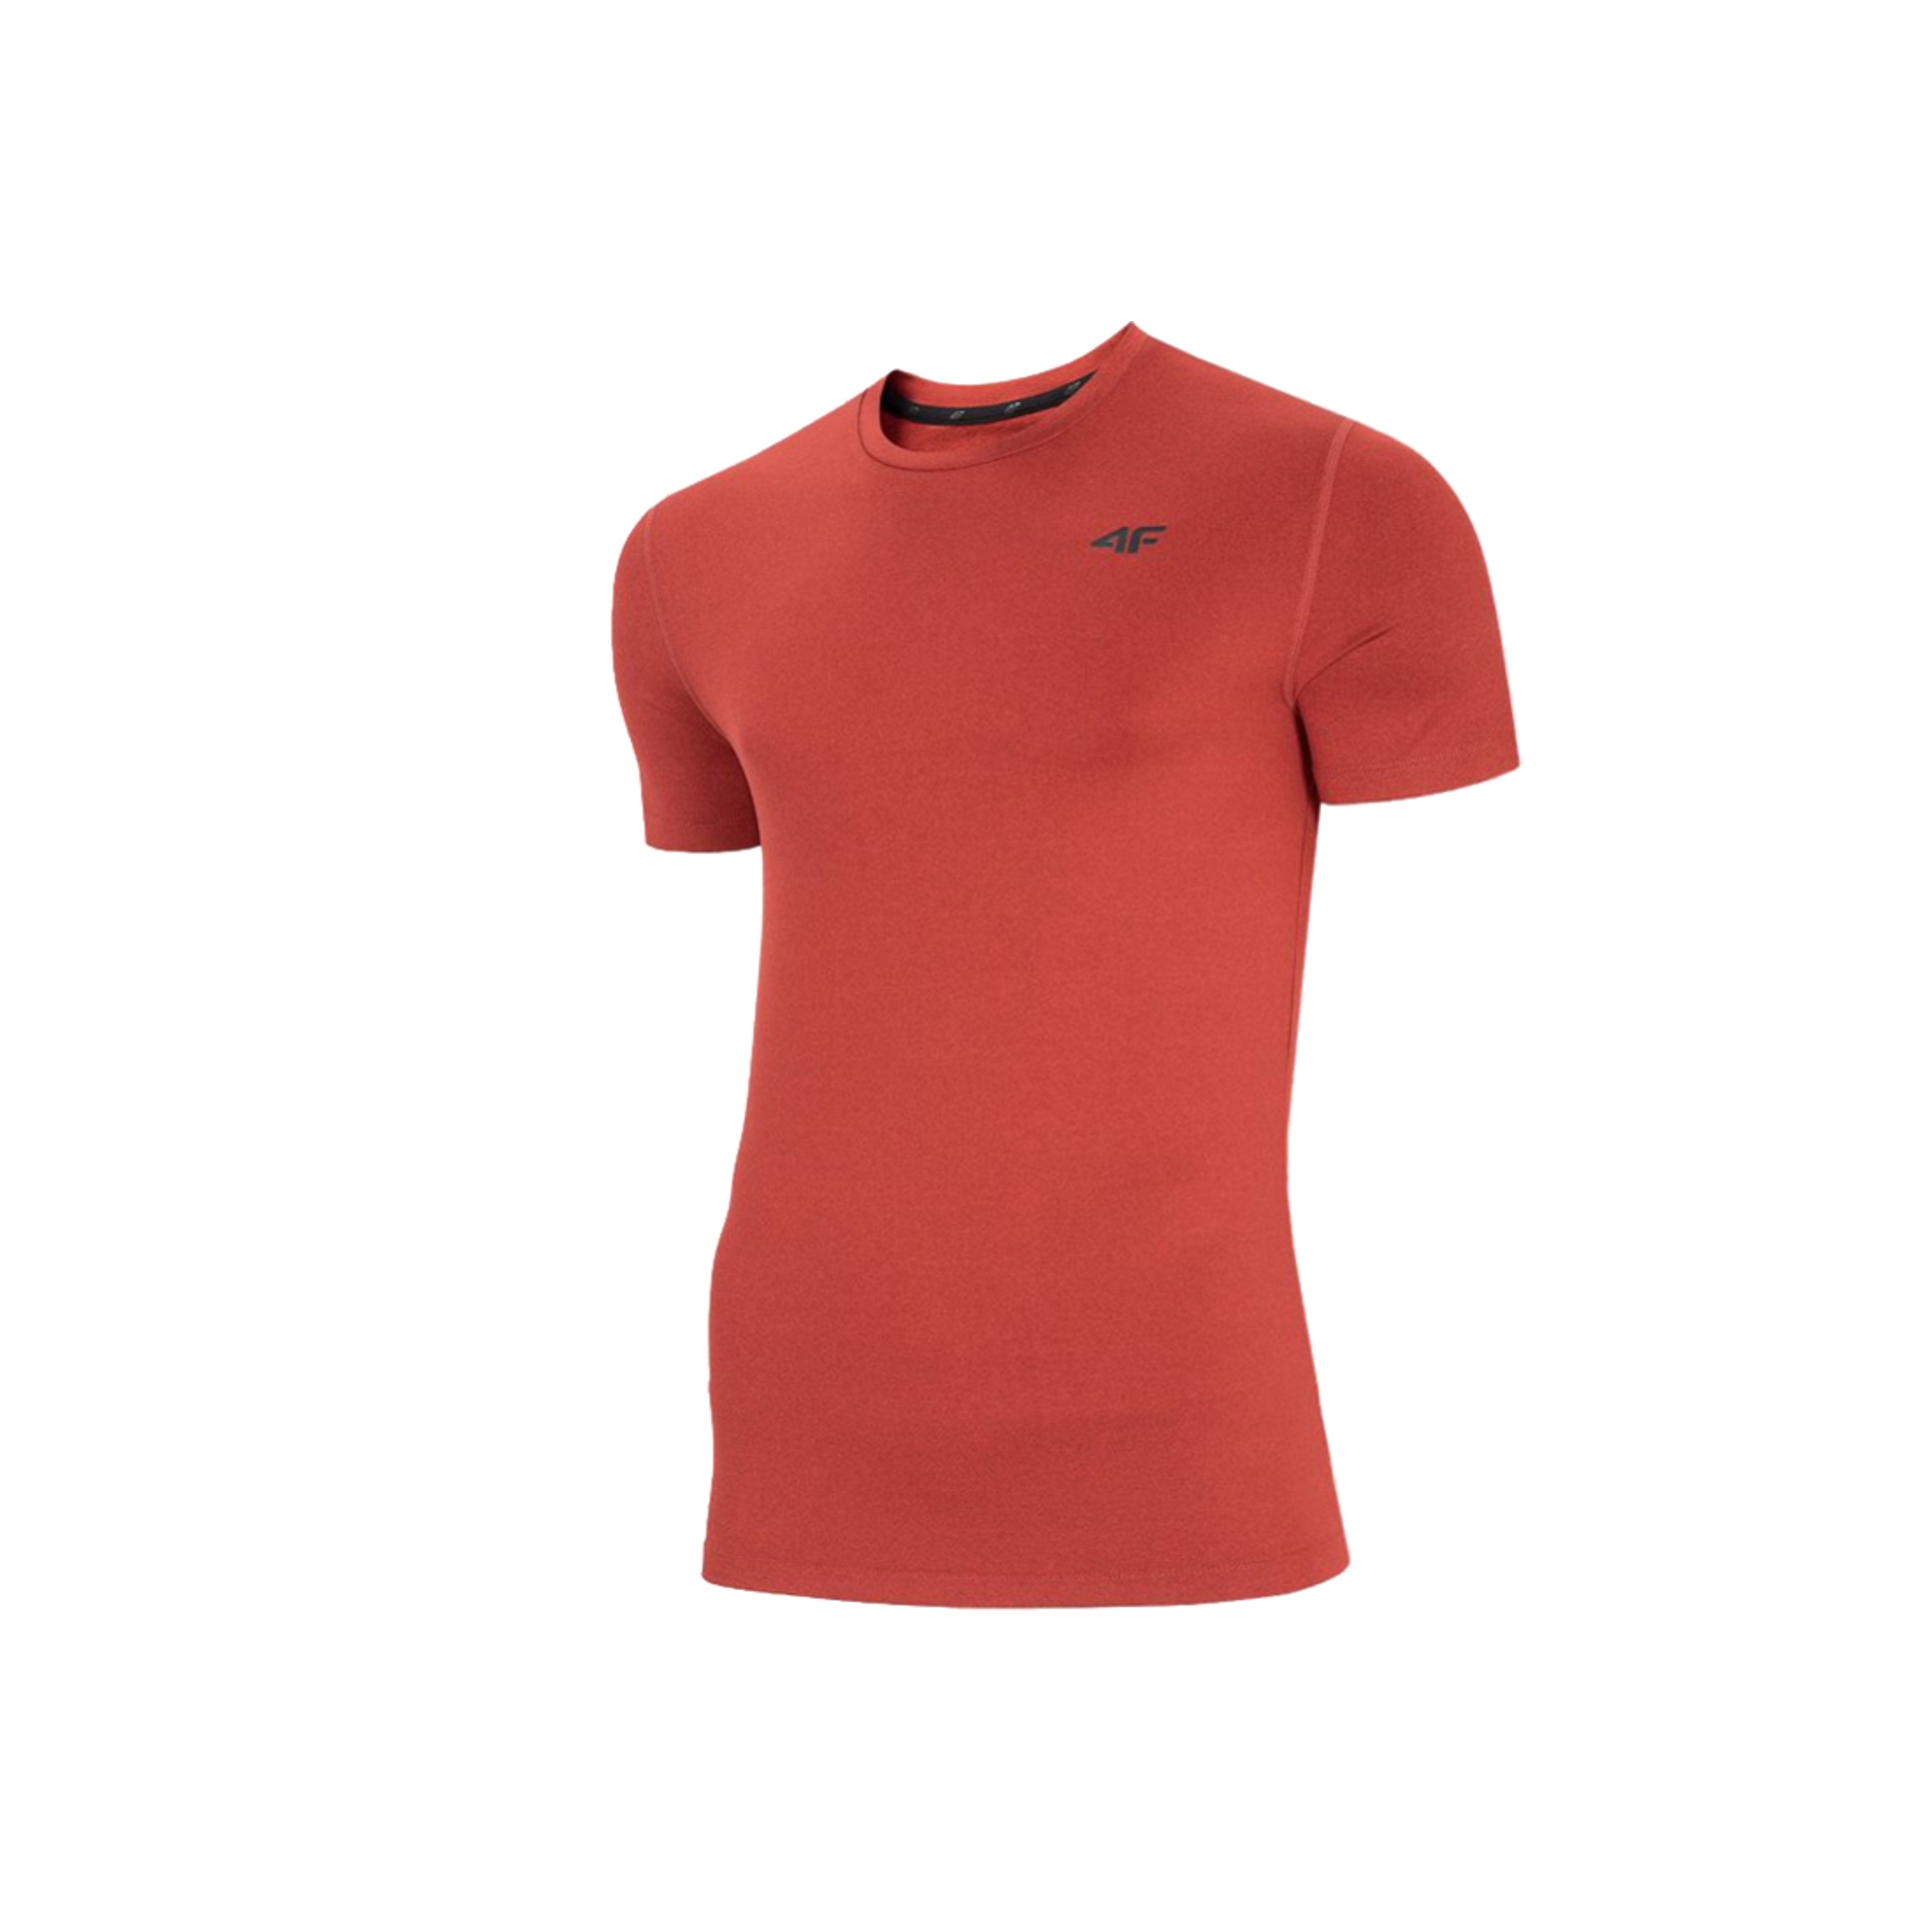 Camiseta 4f Clothes Nosh - rojo - Hombres, Rojo, Camiseta  MKP